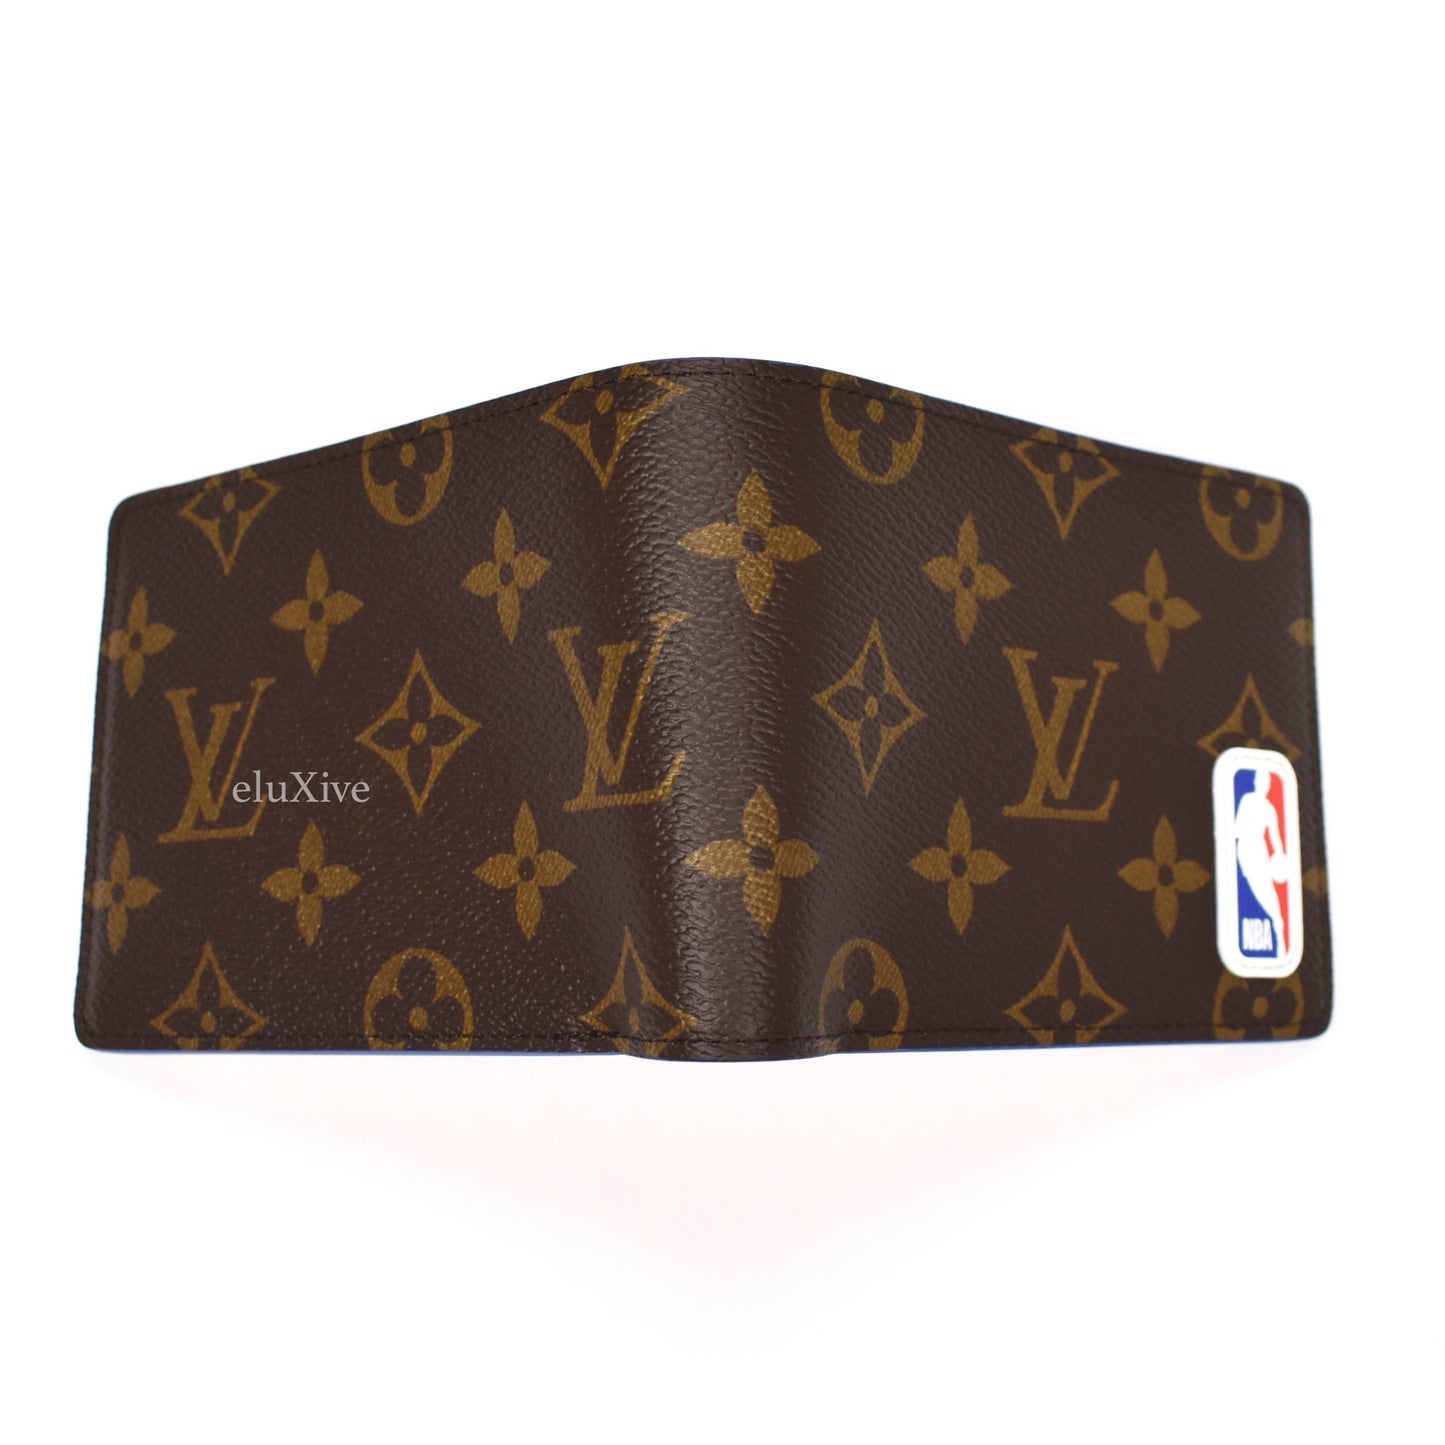 Jual Louis Vuitton Monogram Wallet x NBA SUPER LIMITED - Kab